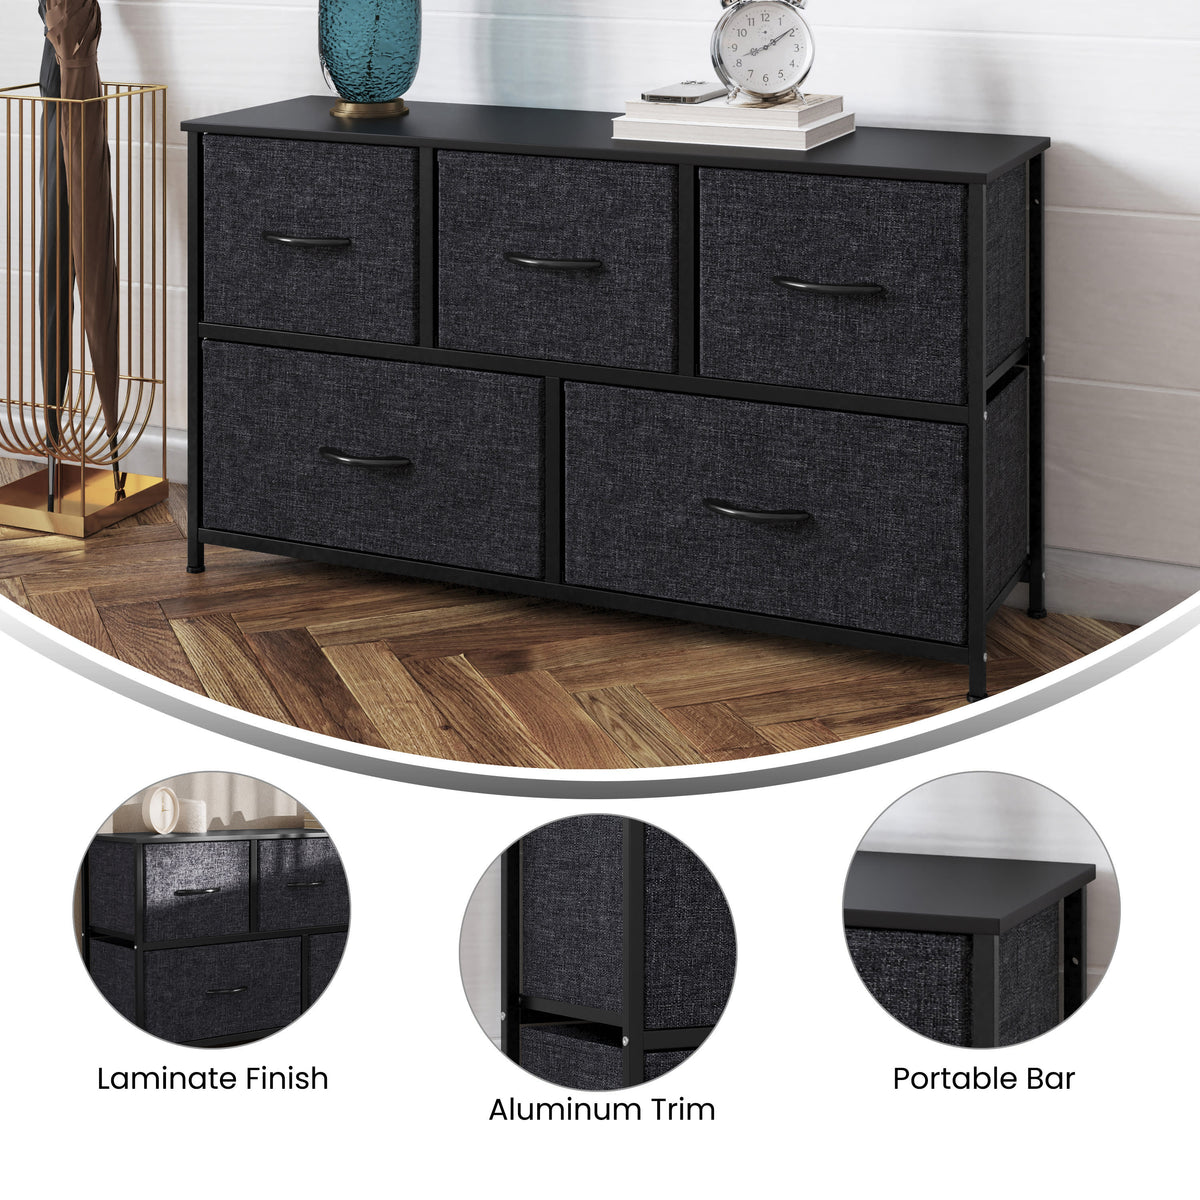 Black Drawers/Black Frame |#| 5 Drawer Dresser-Black Wood Top/Black Iron Frame/Black Drawers - Black Handles